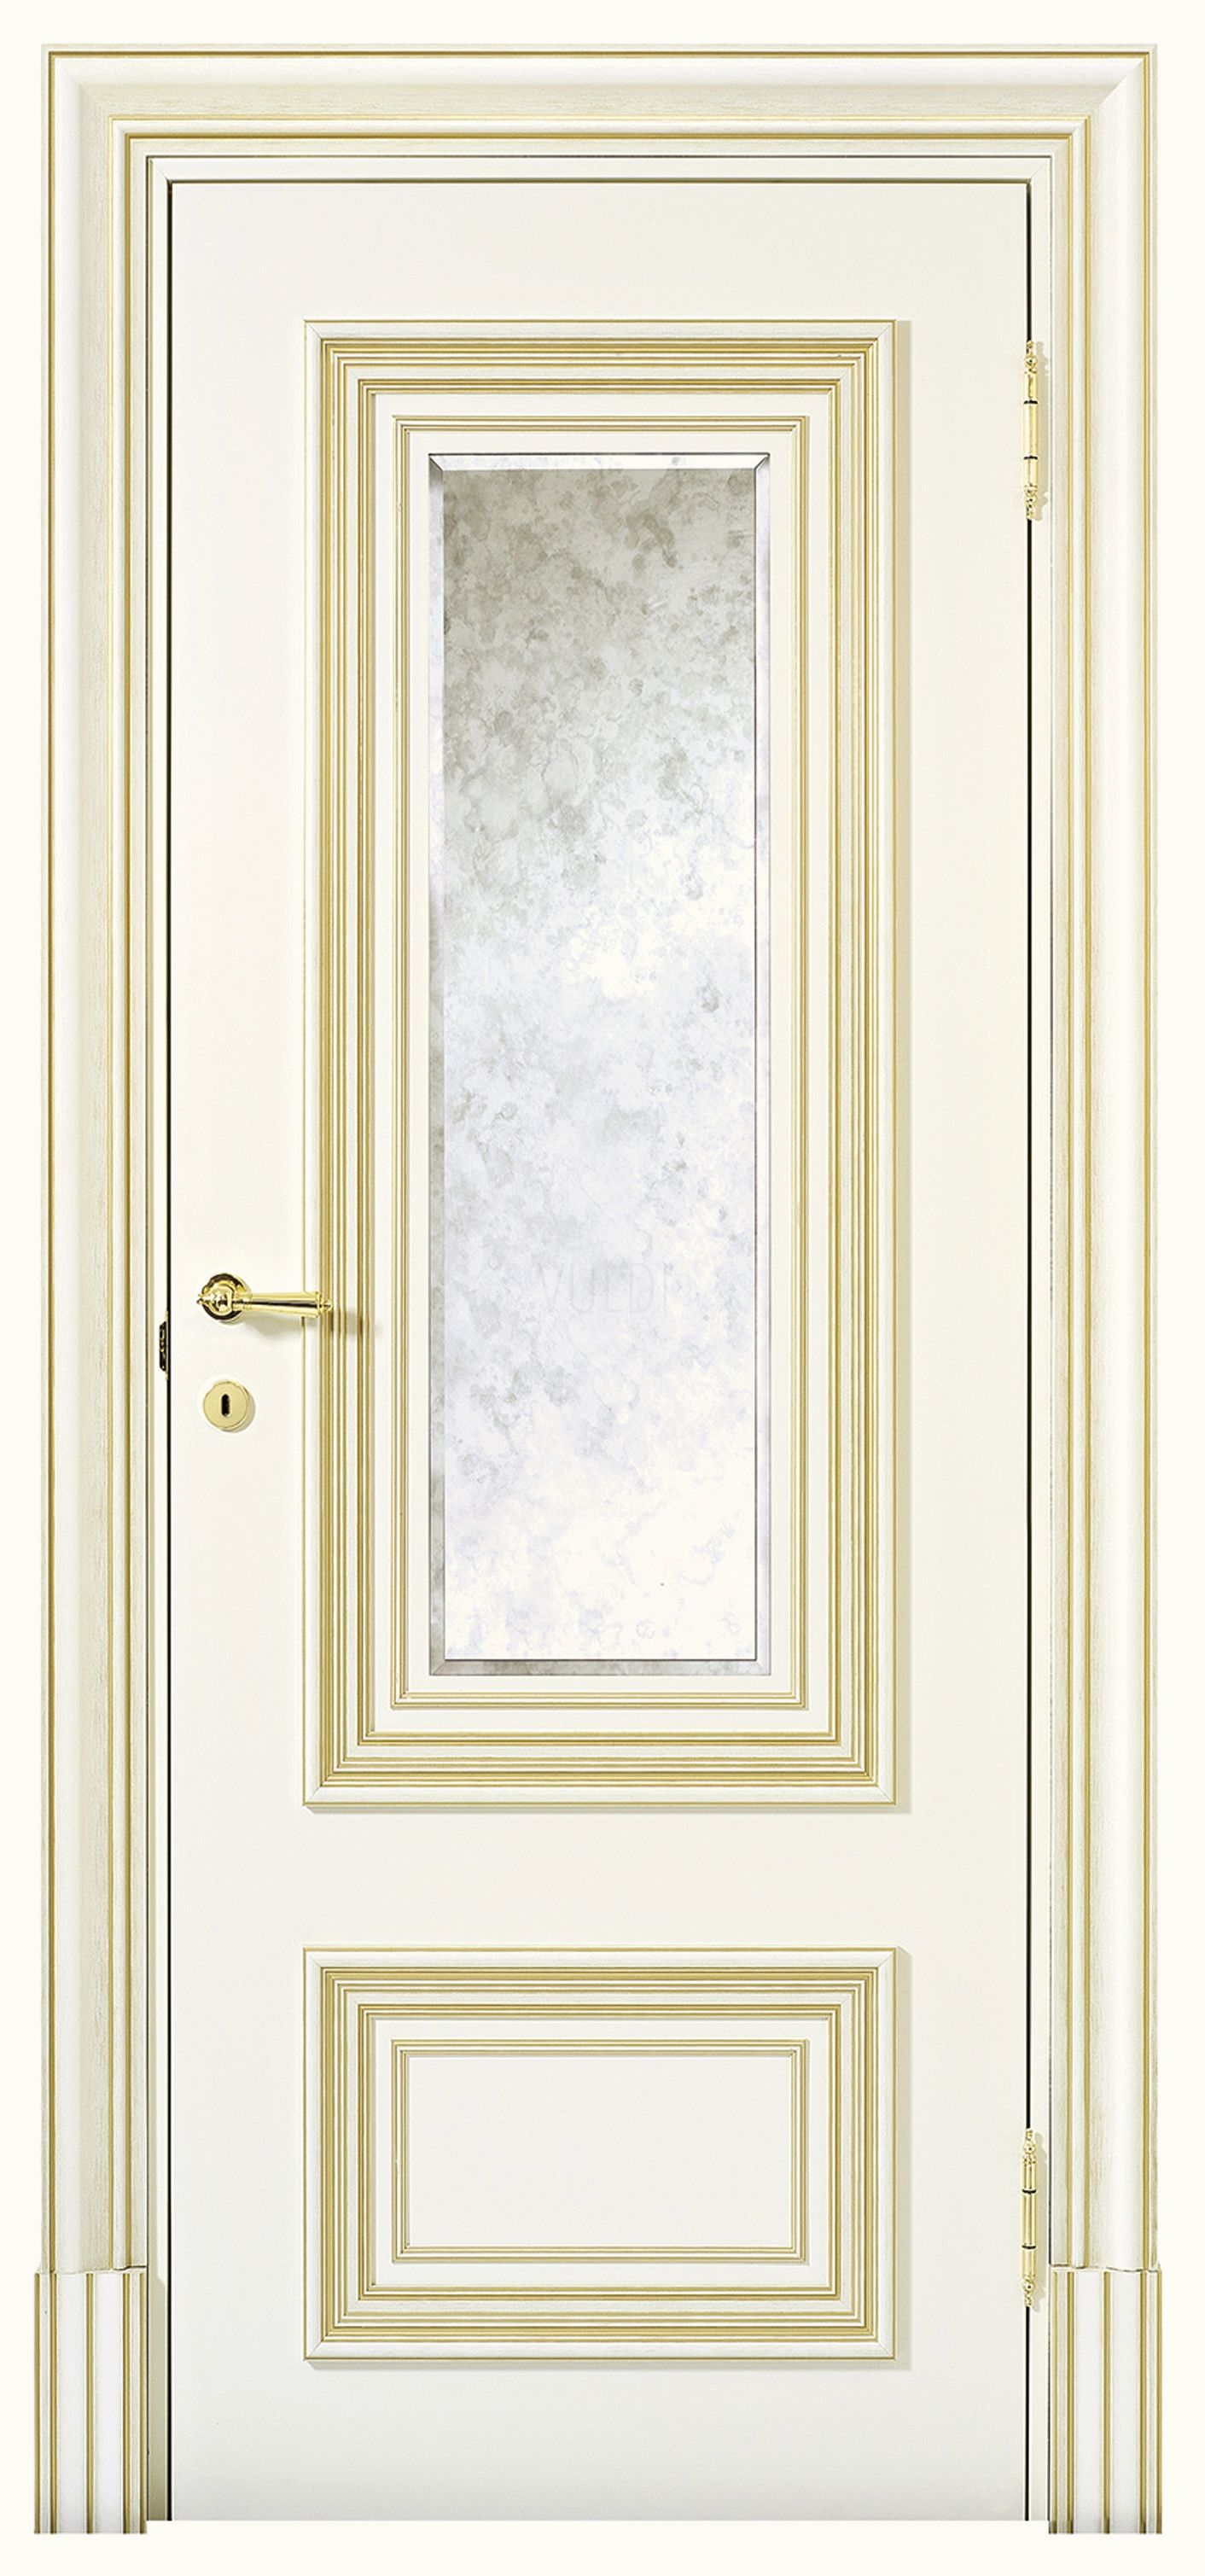  Potenza classico 150 PP Interior Door image from VULDI COMPANY